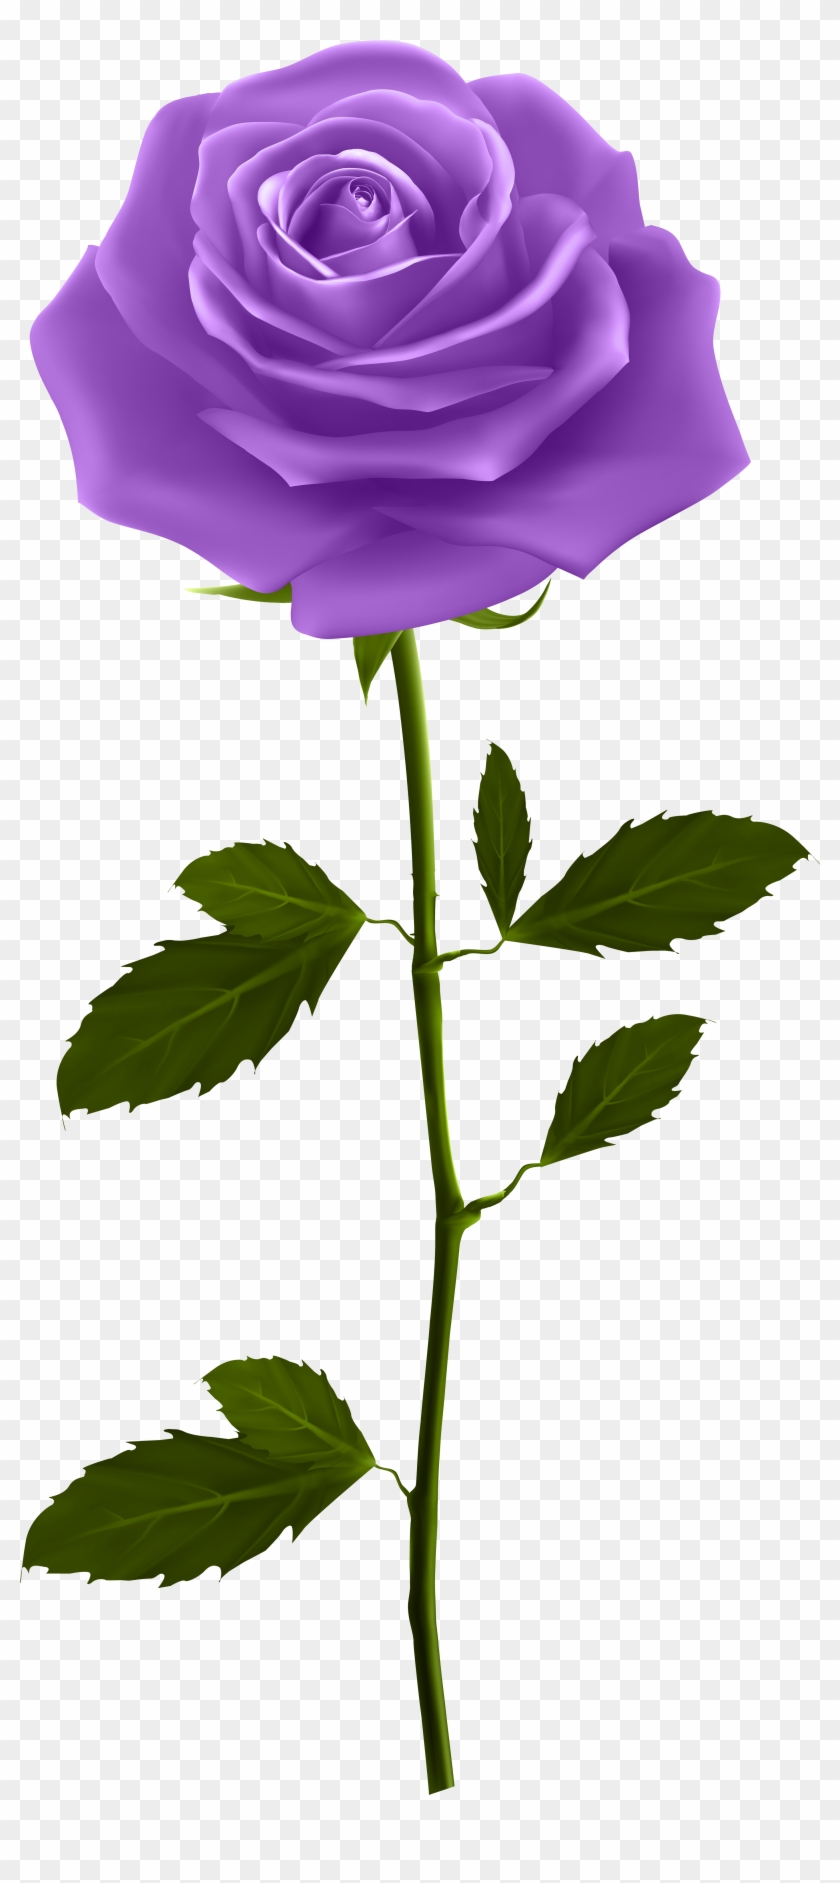 Purple Rose With Stem Png Clip Art Image Ðîçû - Good Morning Gif For Whatsapp #568585